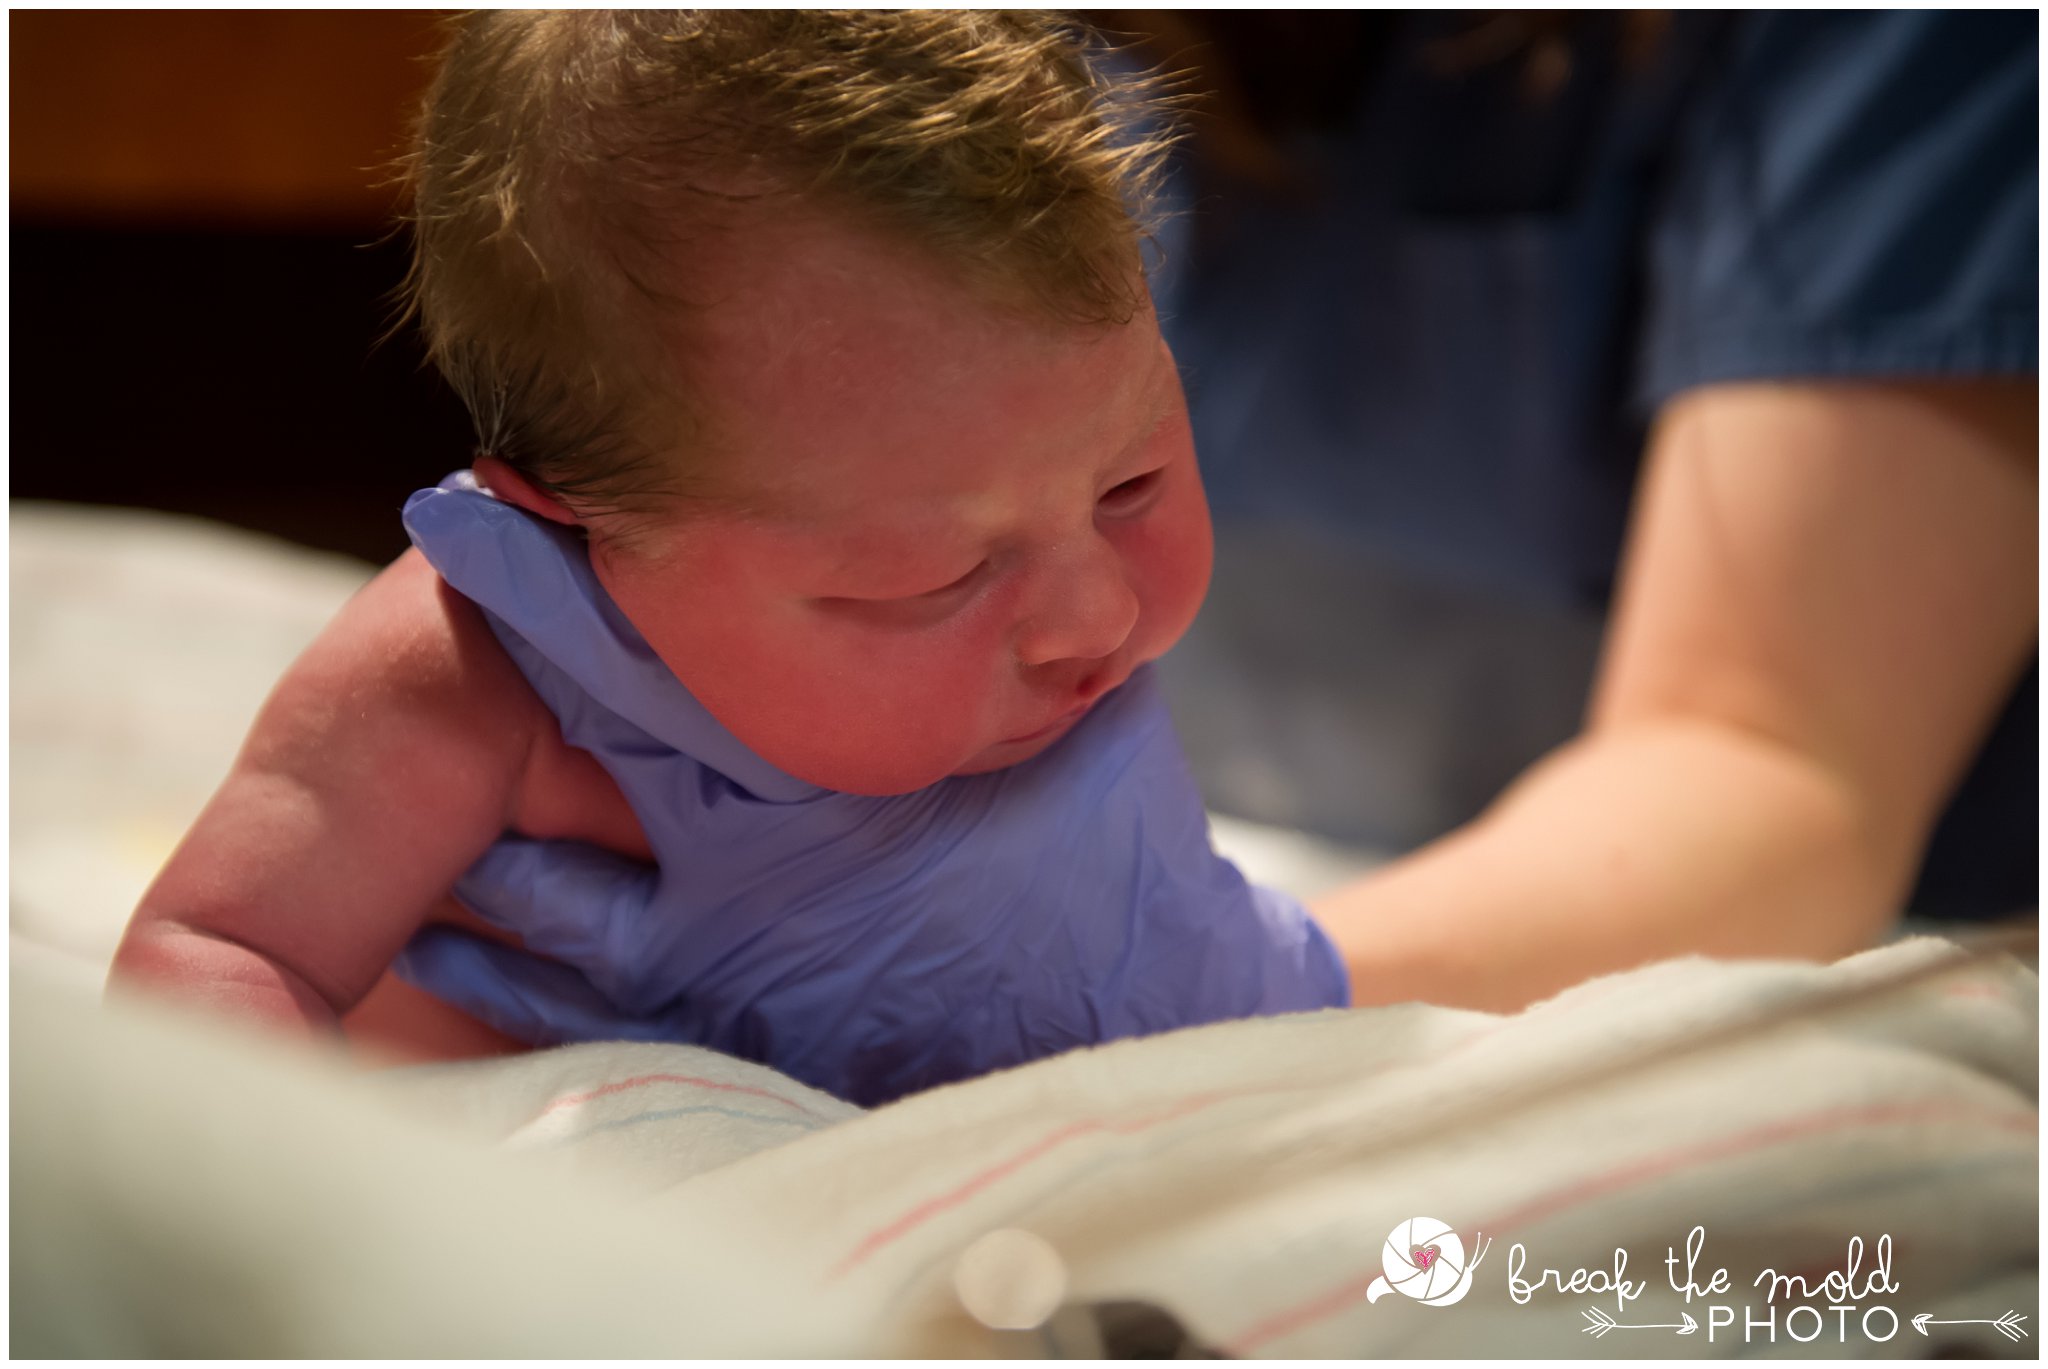 fresh-24-newborn-in-hospital-break-the-mold-photo-baby-girl-sweet-in-room-photos (7).jpg